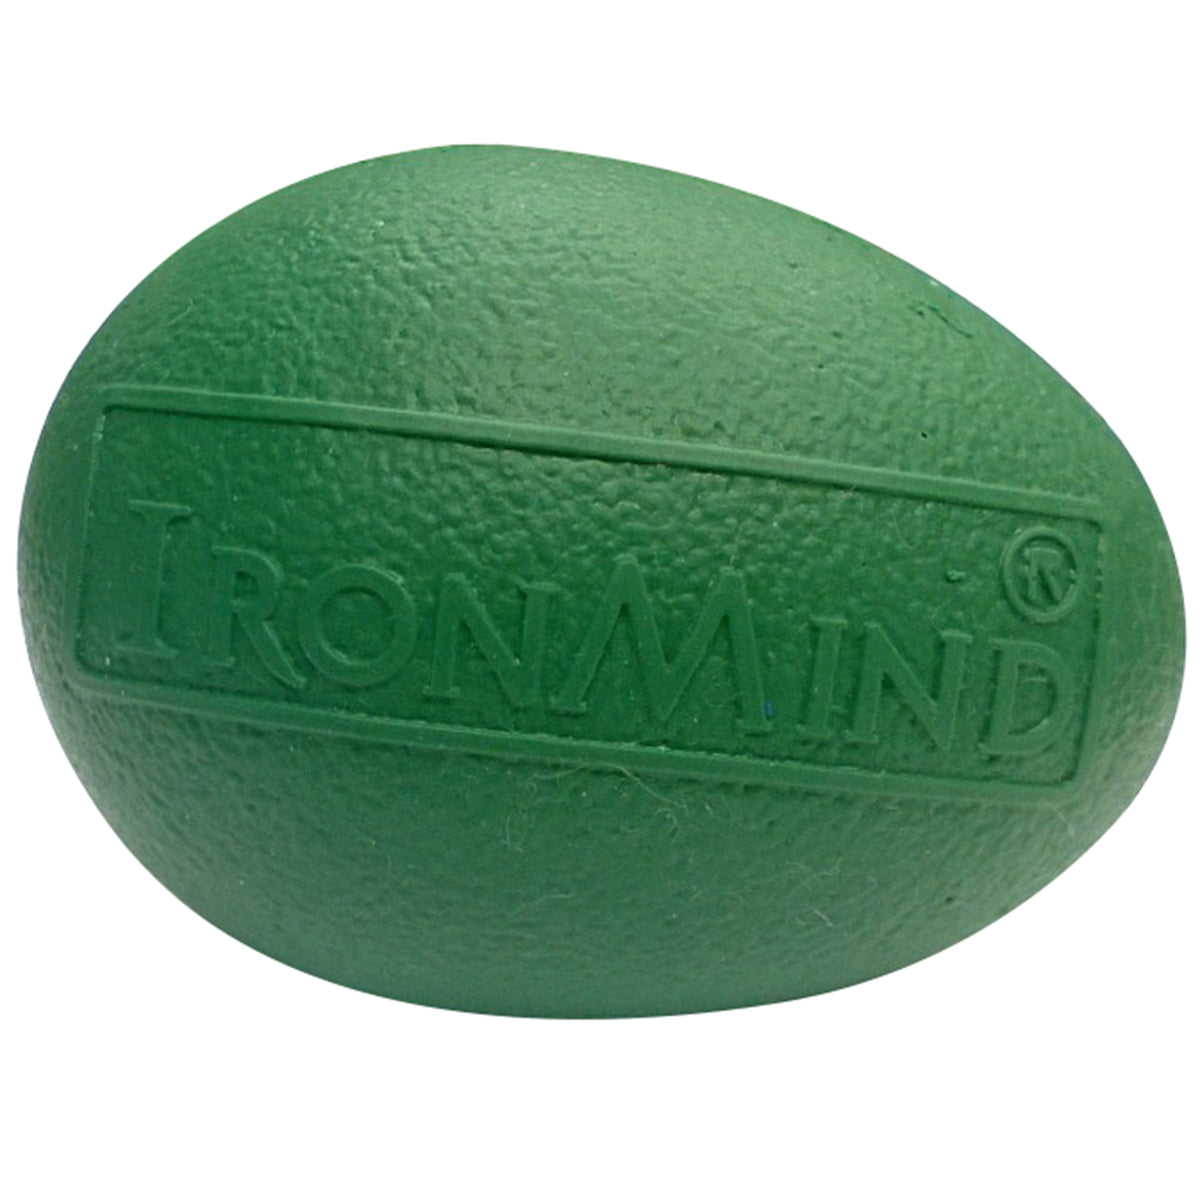 IronMind Egg Hand Grip Strengthener - Green IronMind